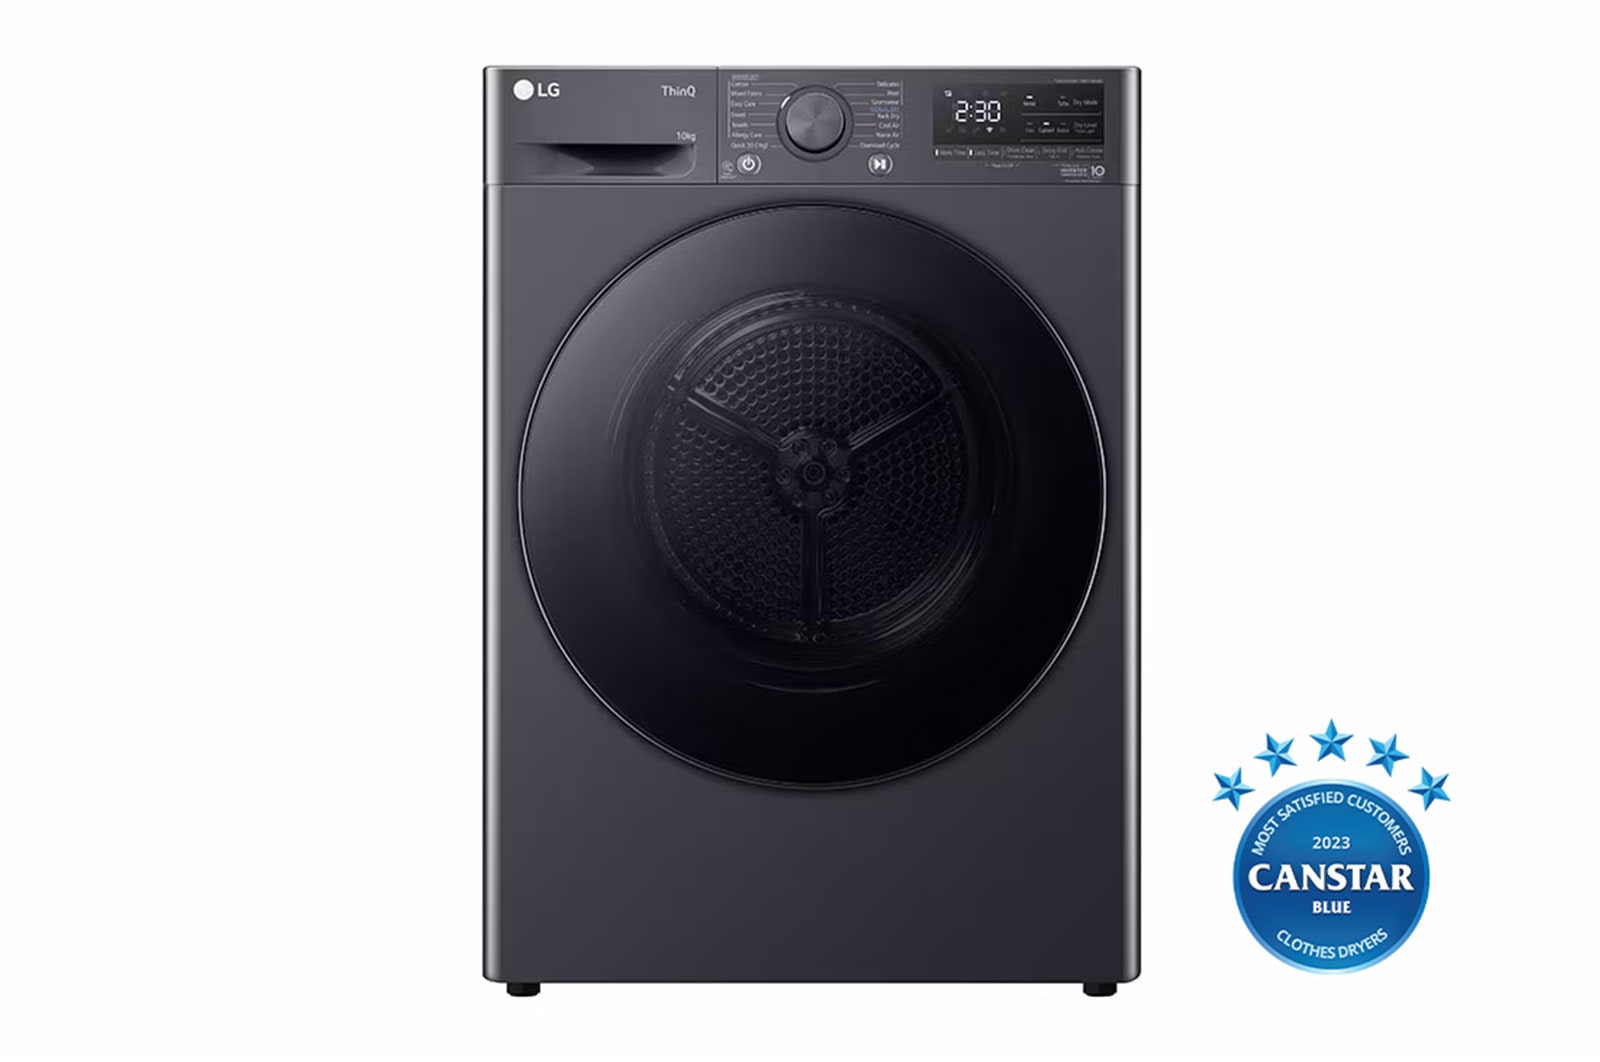 LG 10kg Series 5 Heat Pump Dryer with Auto Cleaning Condenser - Grey Finish, DVH5-10G